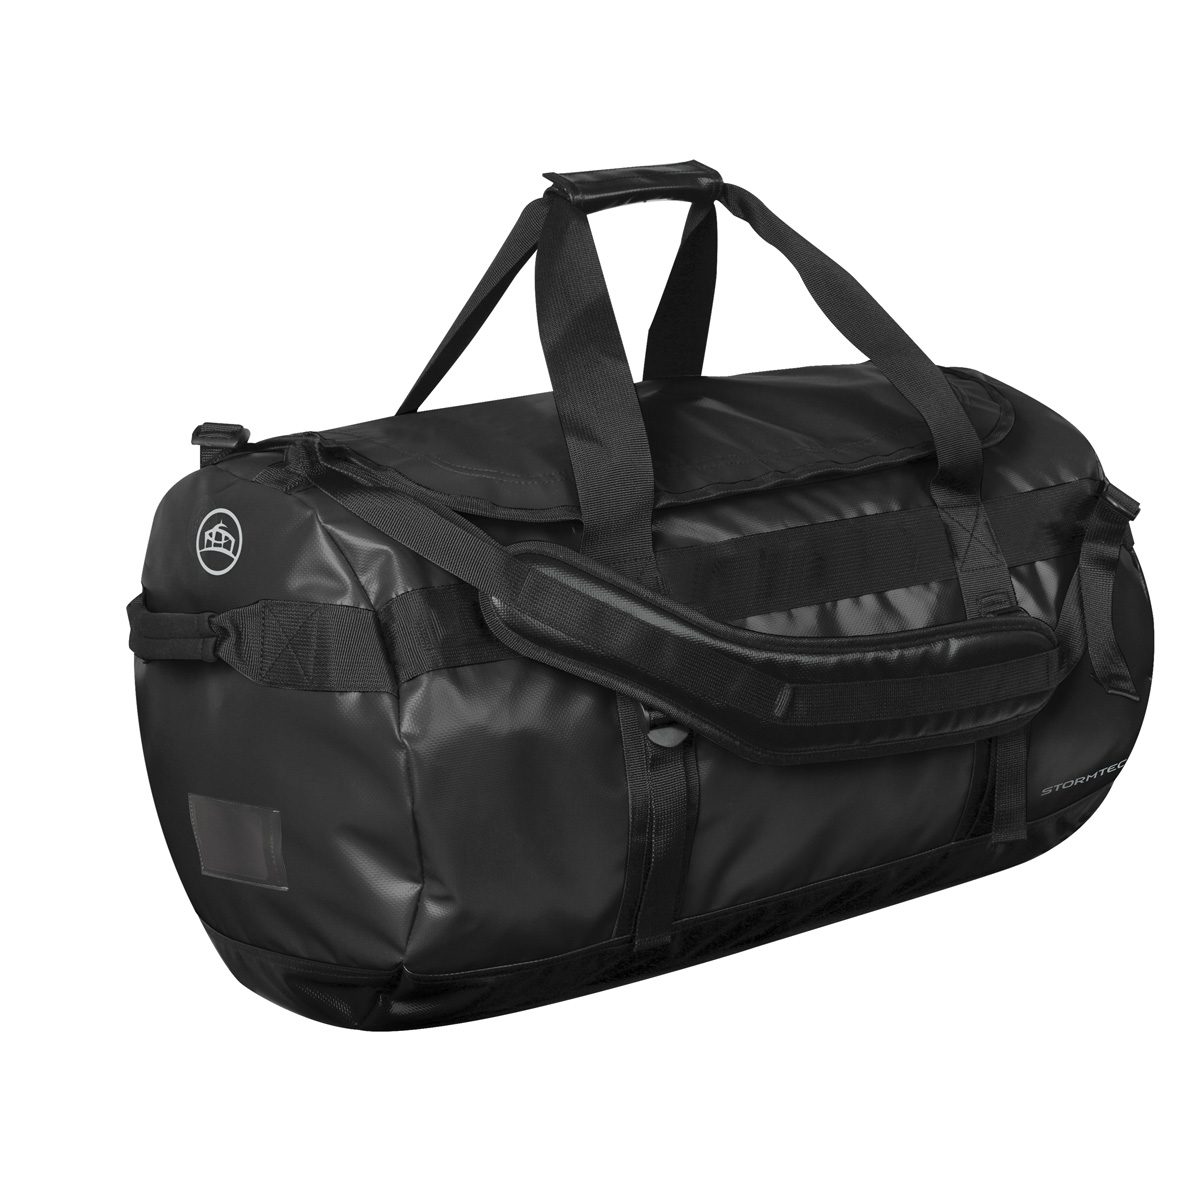 Stormtech Atlantis Waterproof Gear Bag - Medium #GBW-1MLE Black